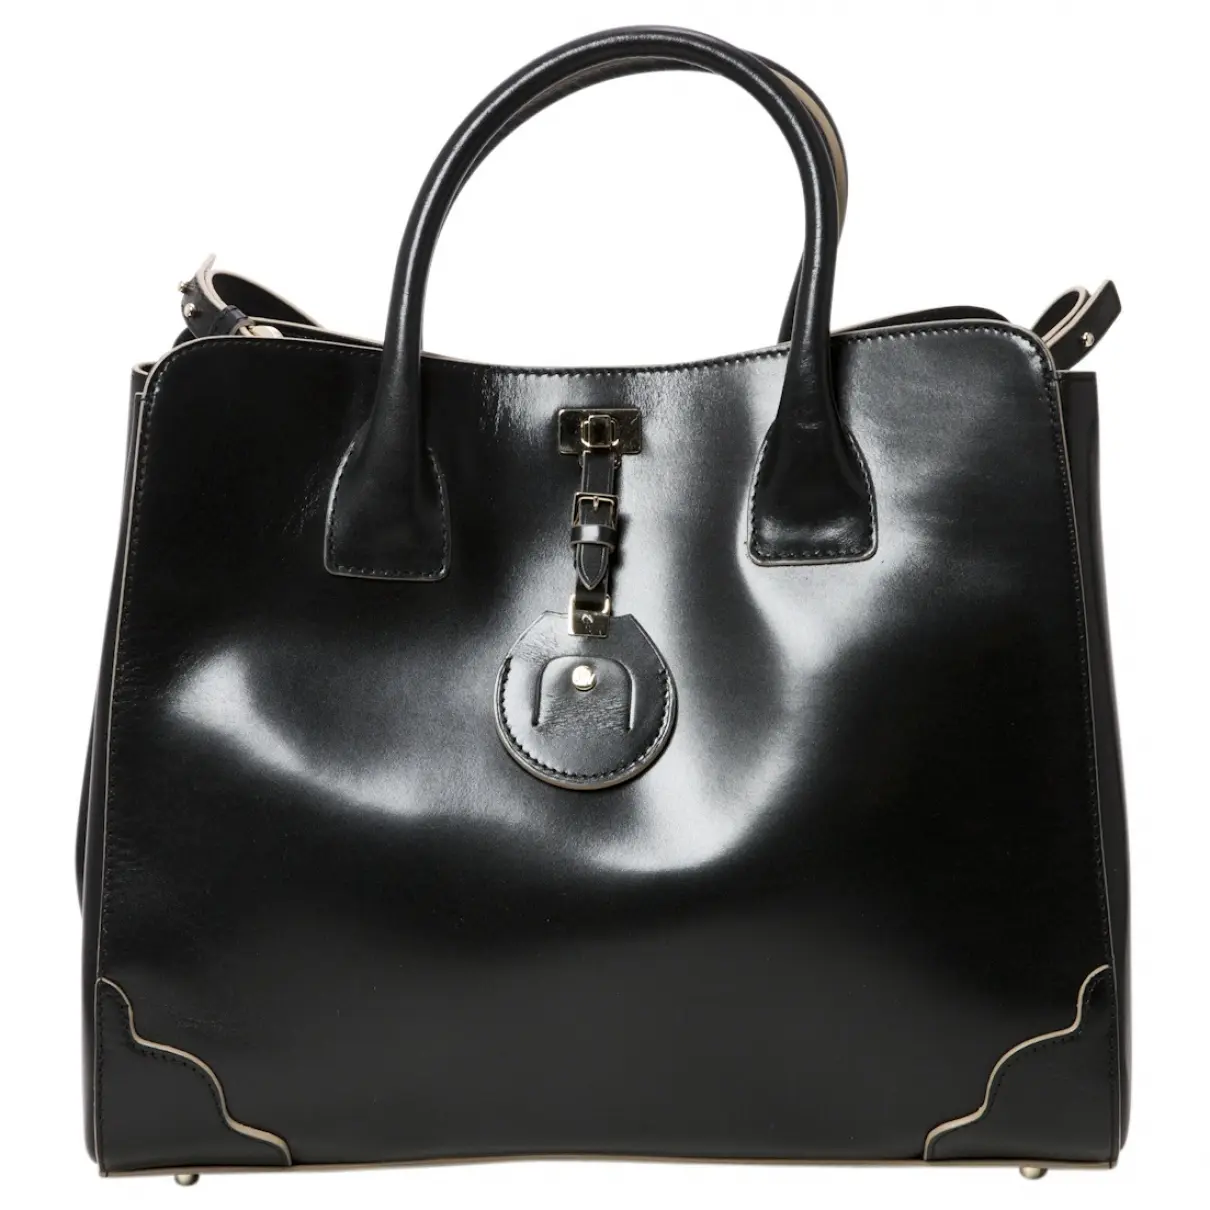 Leather handbag Jason Wu